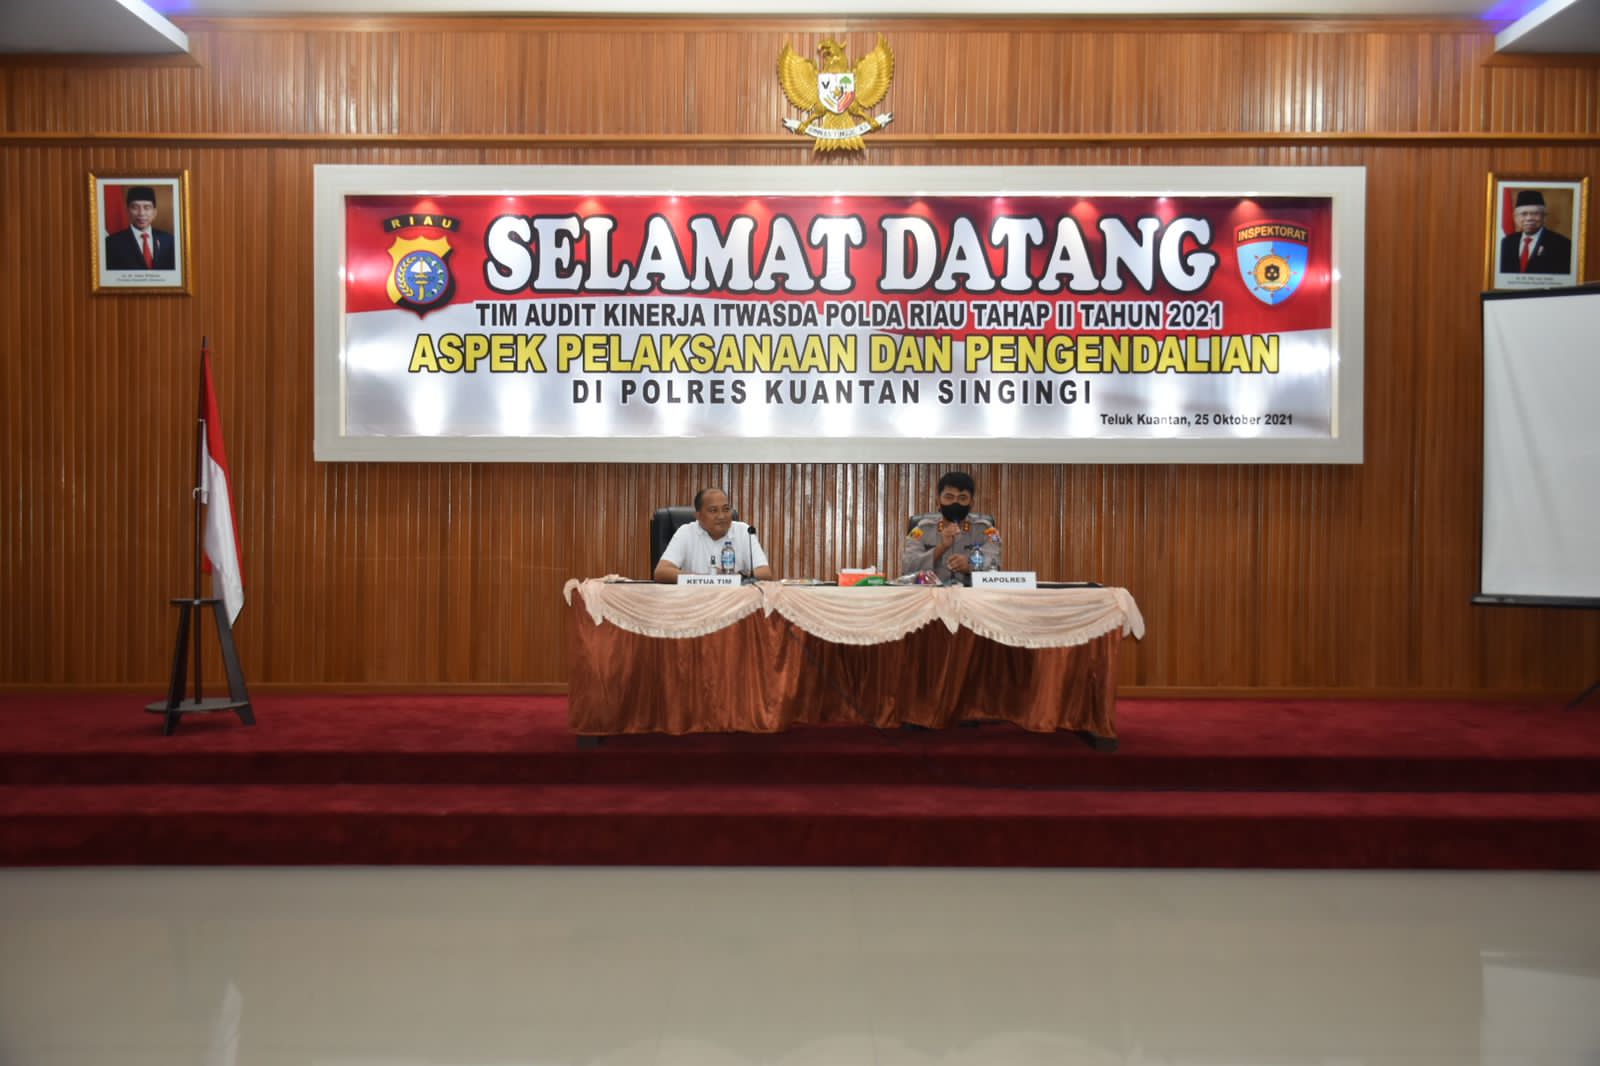 Pembukaan Audit Kinerja Itwasda Polda Riau  Tahap II Aspek Pelaksanaan  Dan Pengendalian Tahun 2021 di Polres Kuantan Singingi